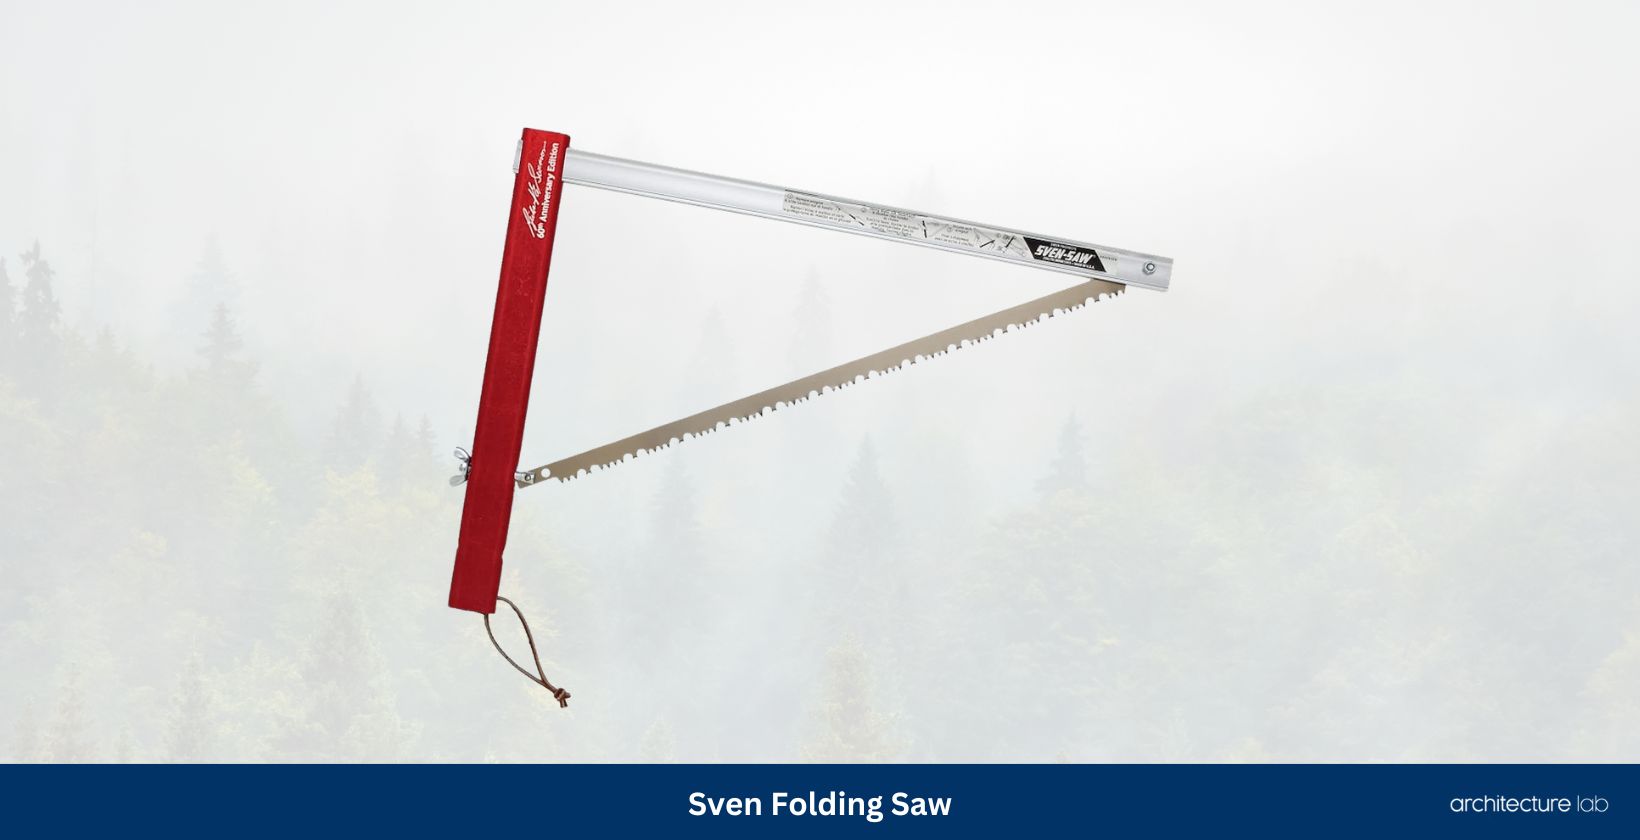 Sven folding saw